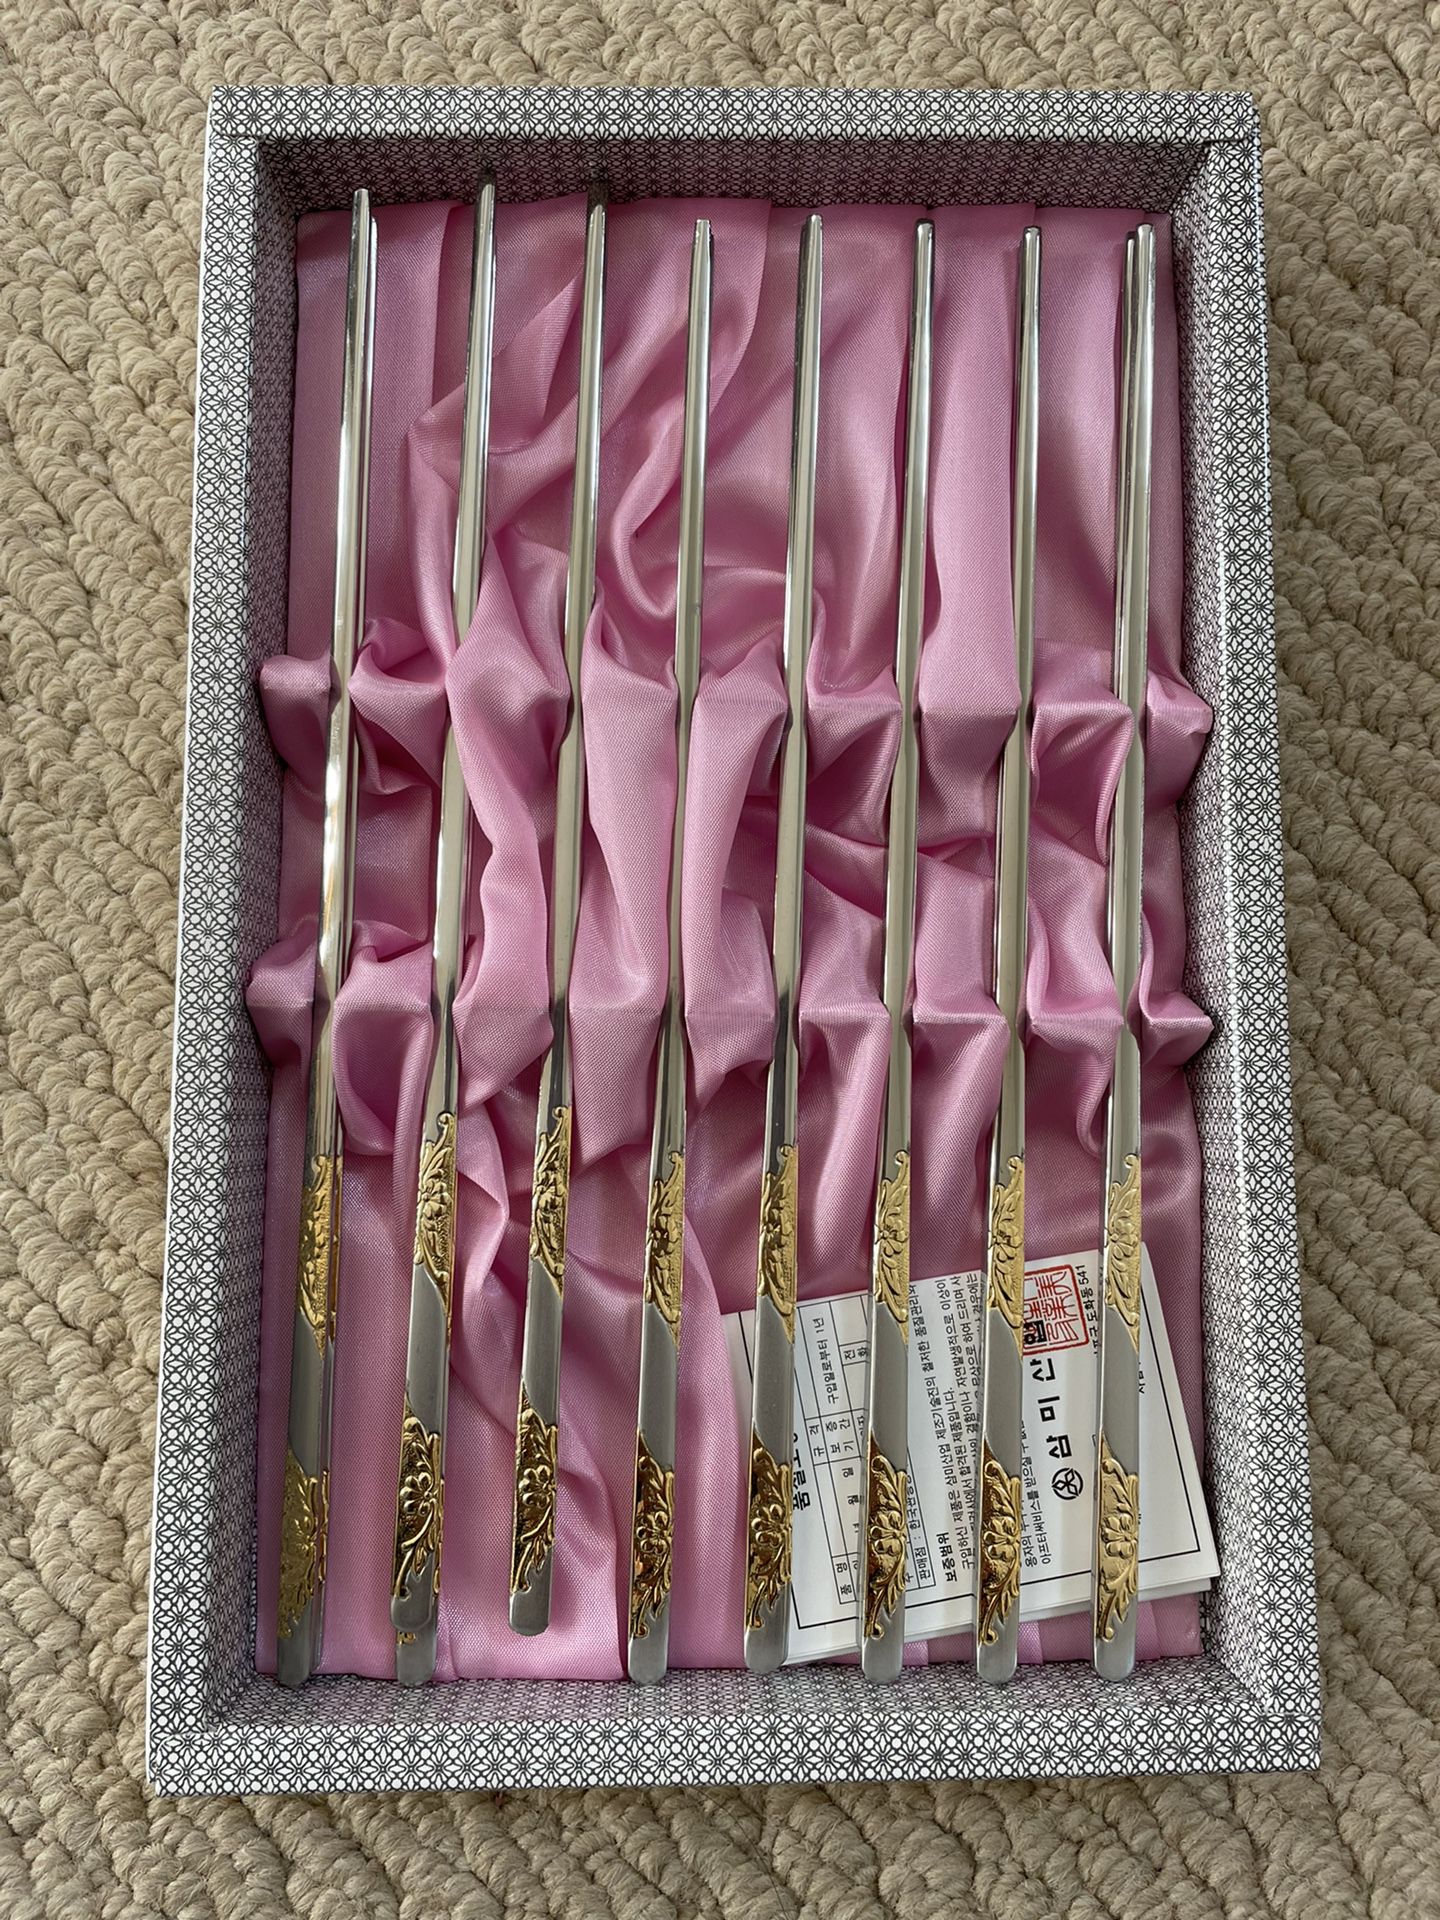 NEW - Korean Chopsticks Gift Set